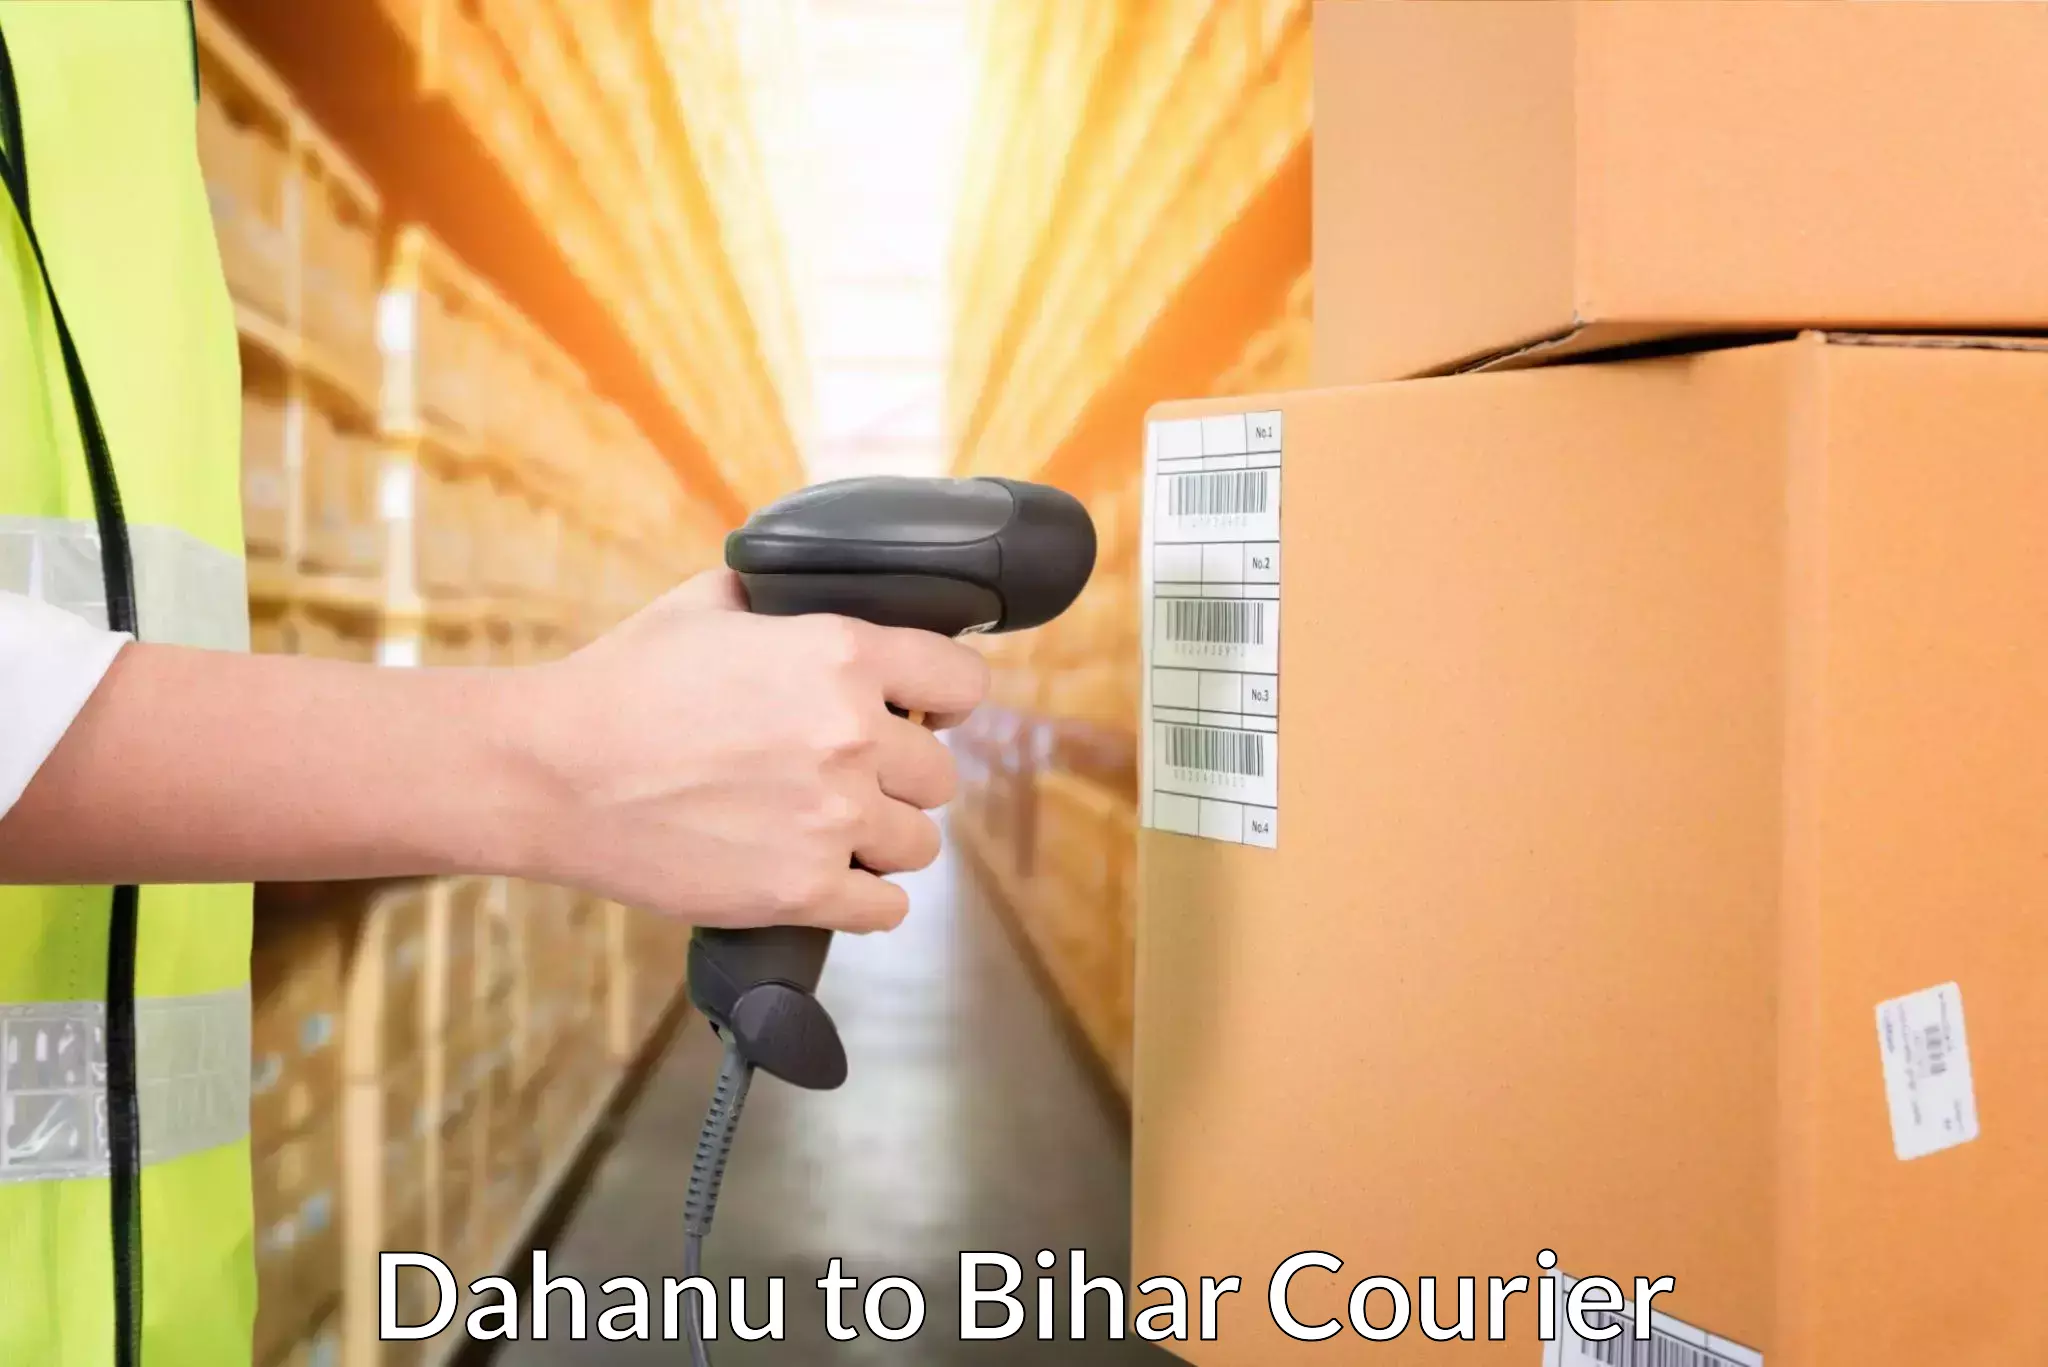 Global shipping networks Dahanu to Dehri